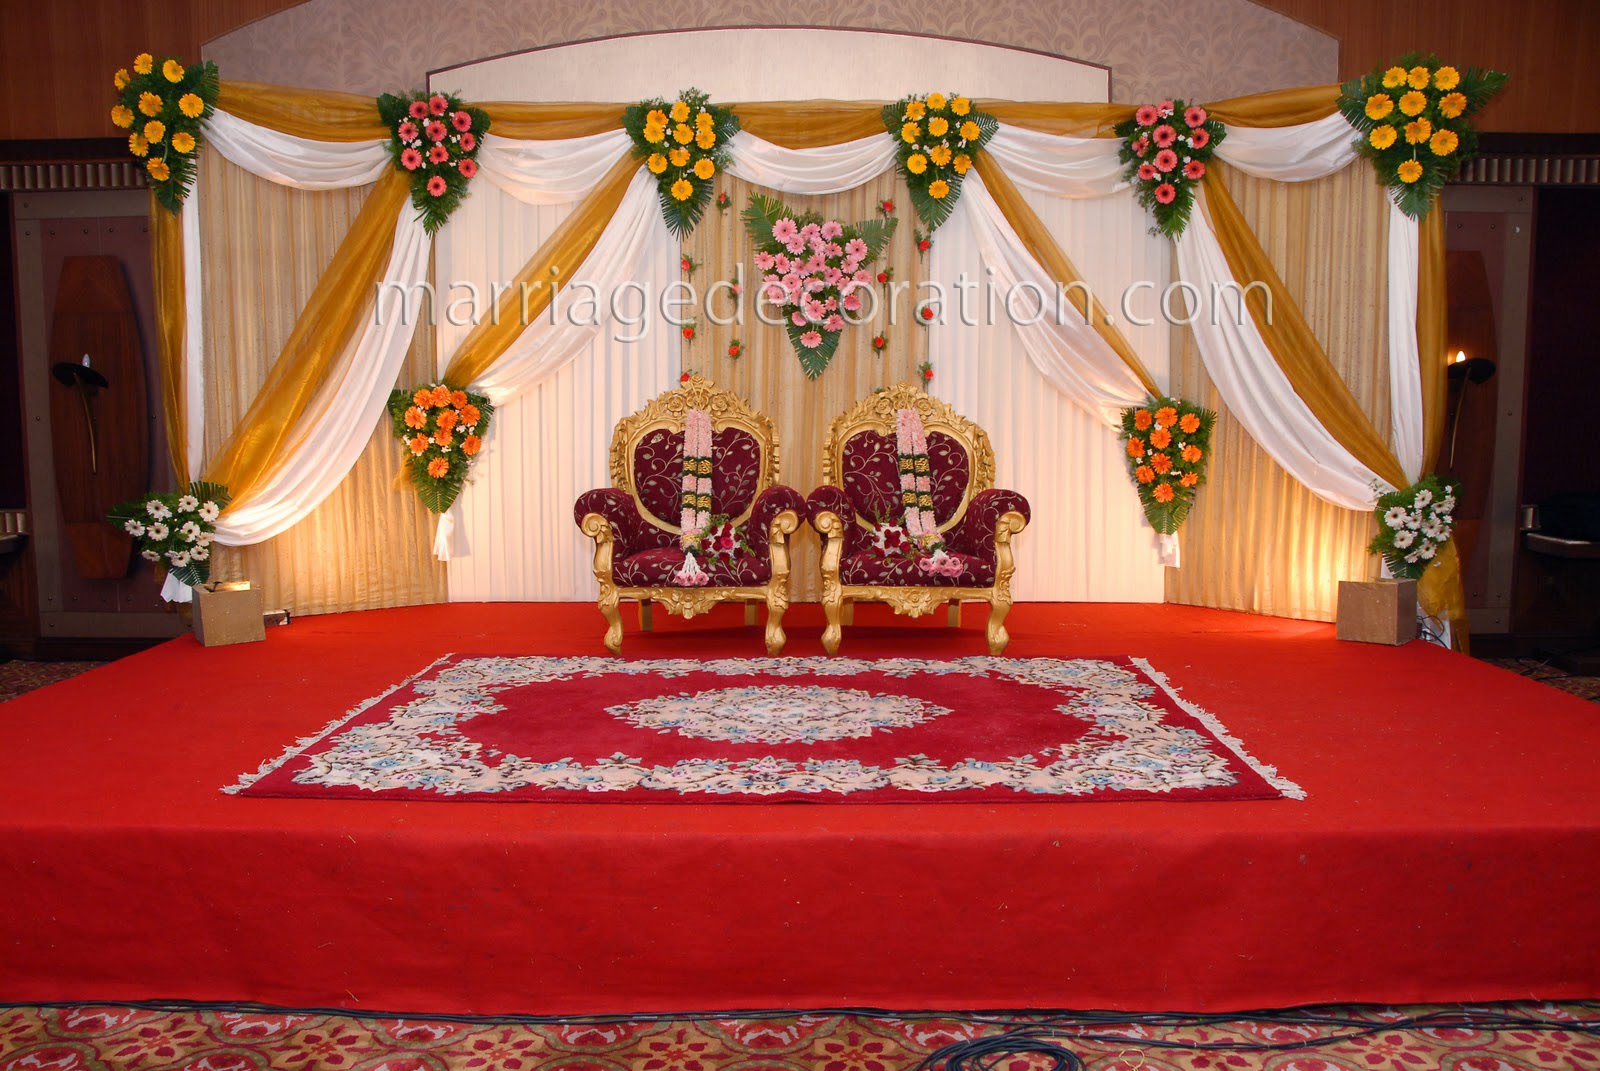 christian wedding decorations stage image